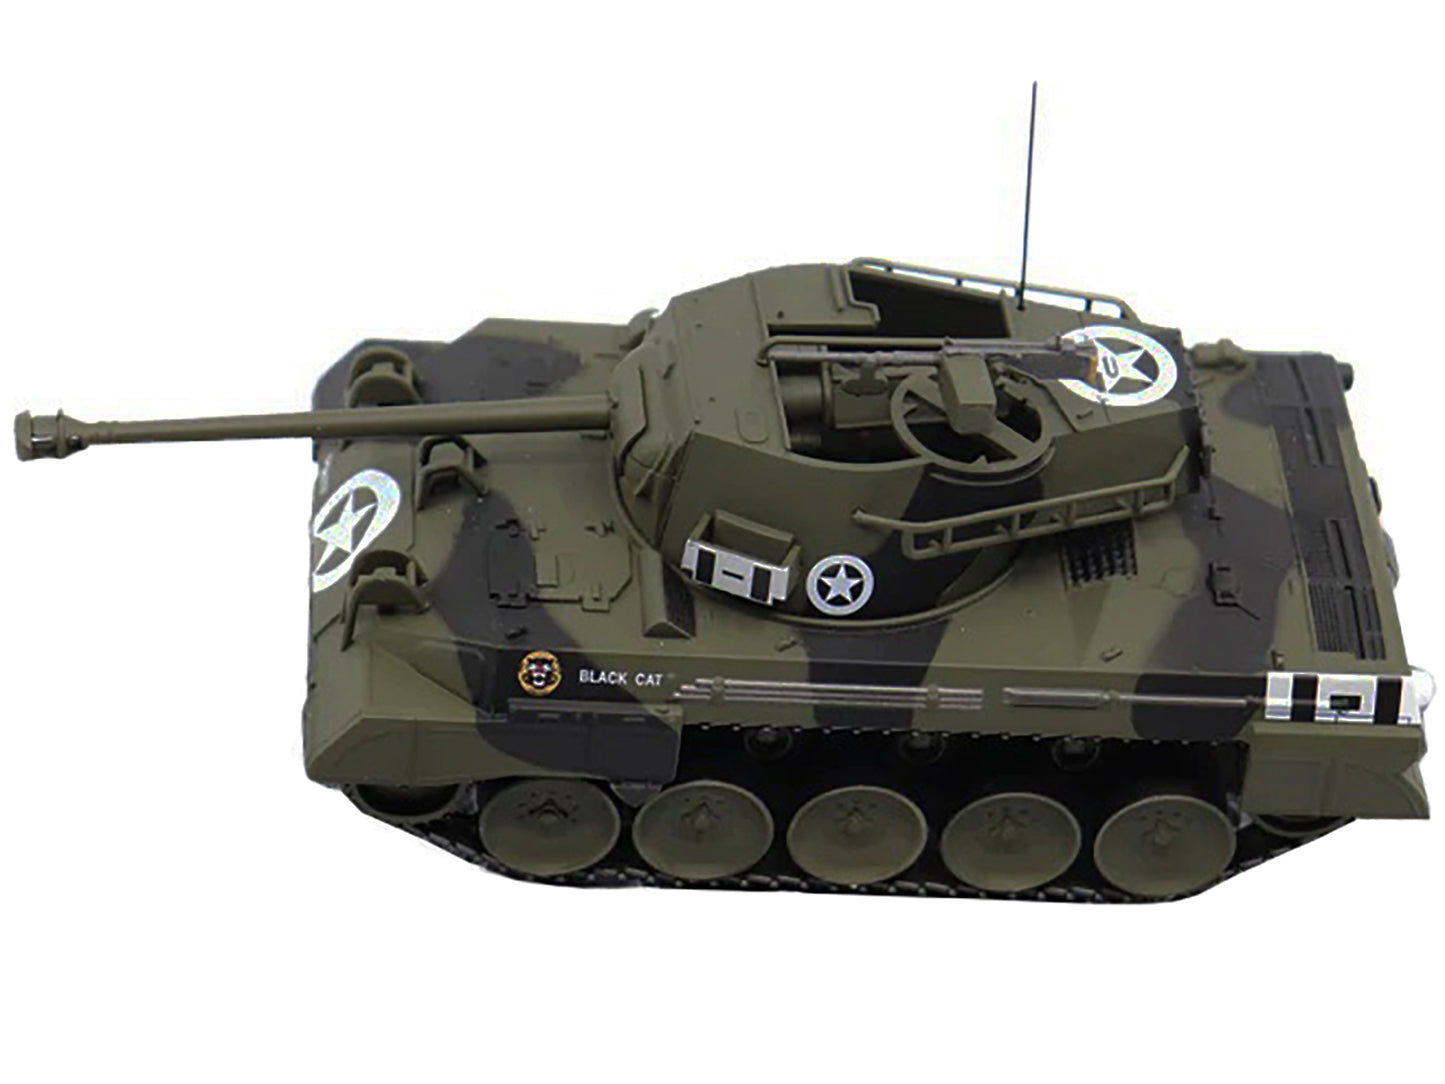 m18 hellcat tank destroyer cat usa 805th battalion italy 1944 1/43 diecast model